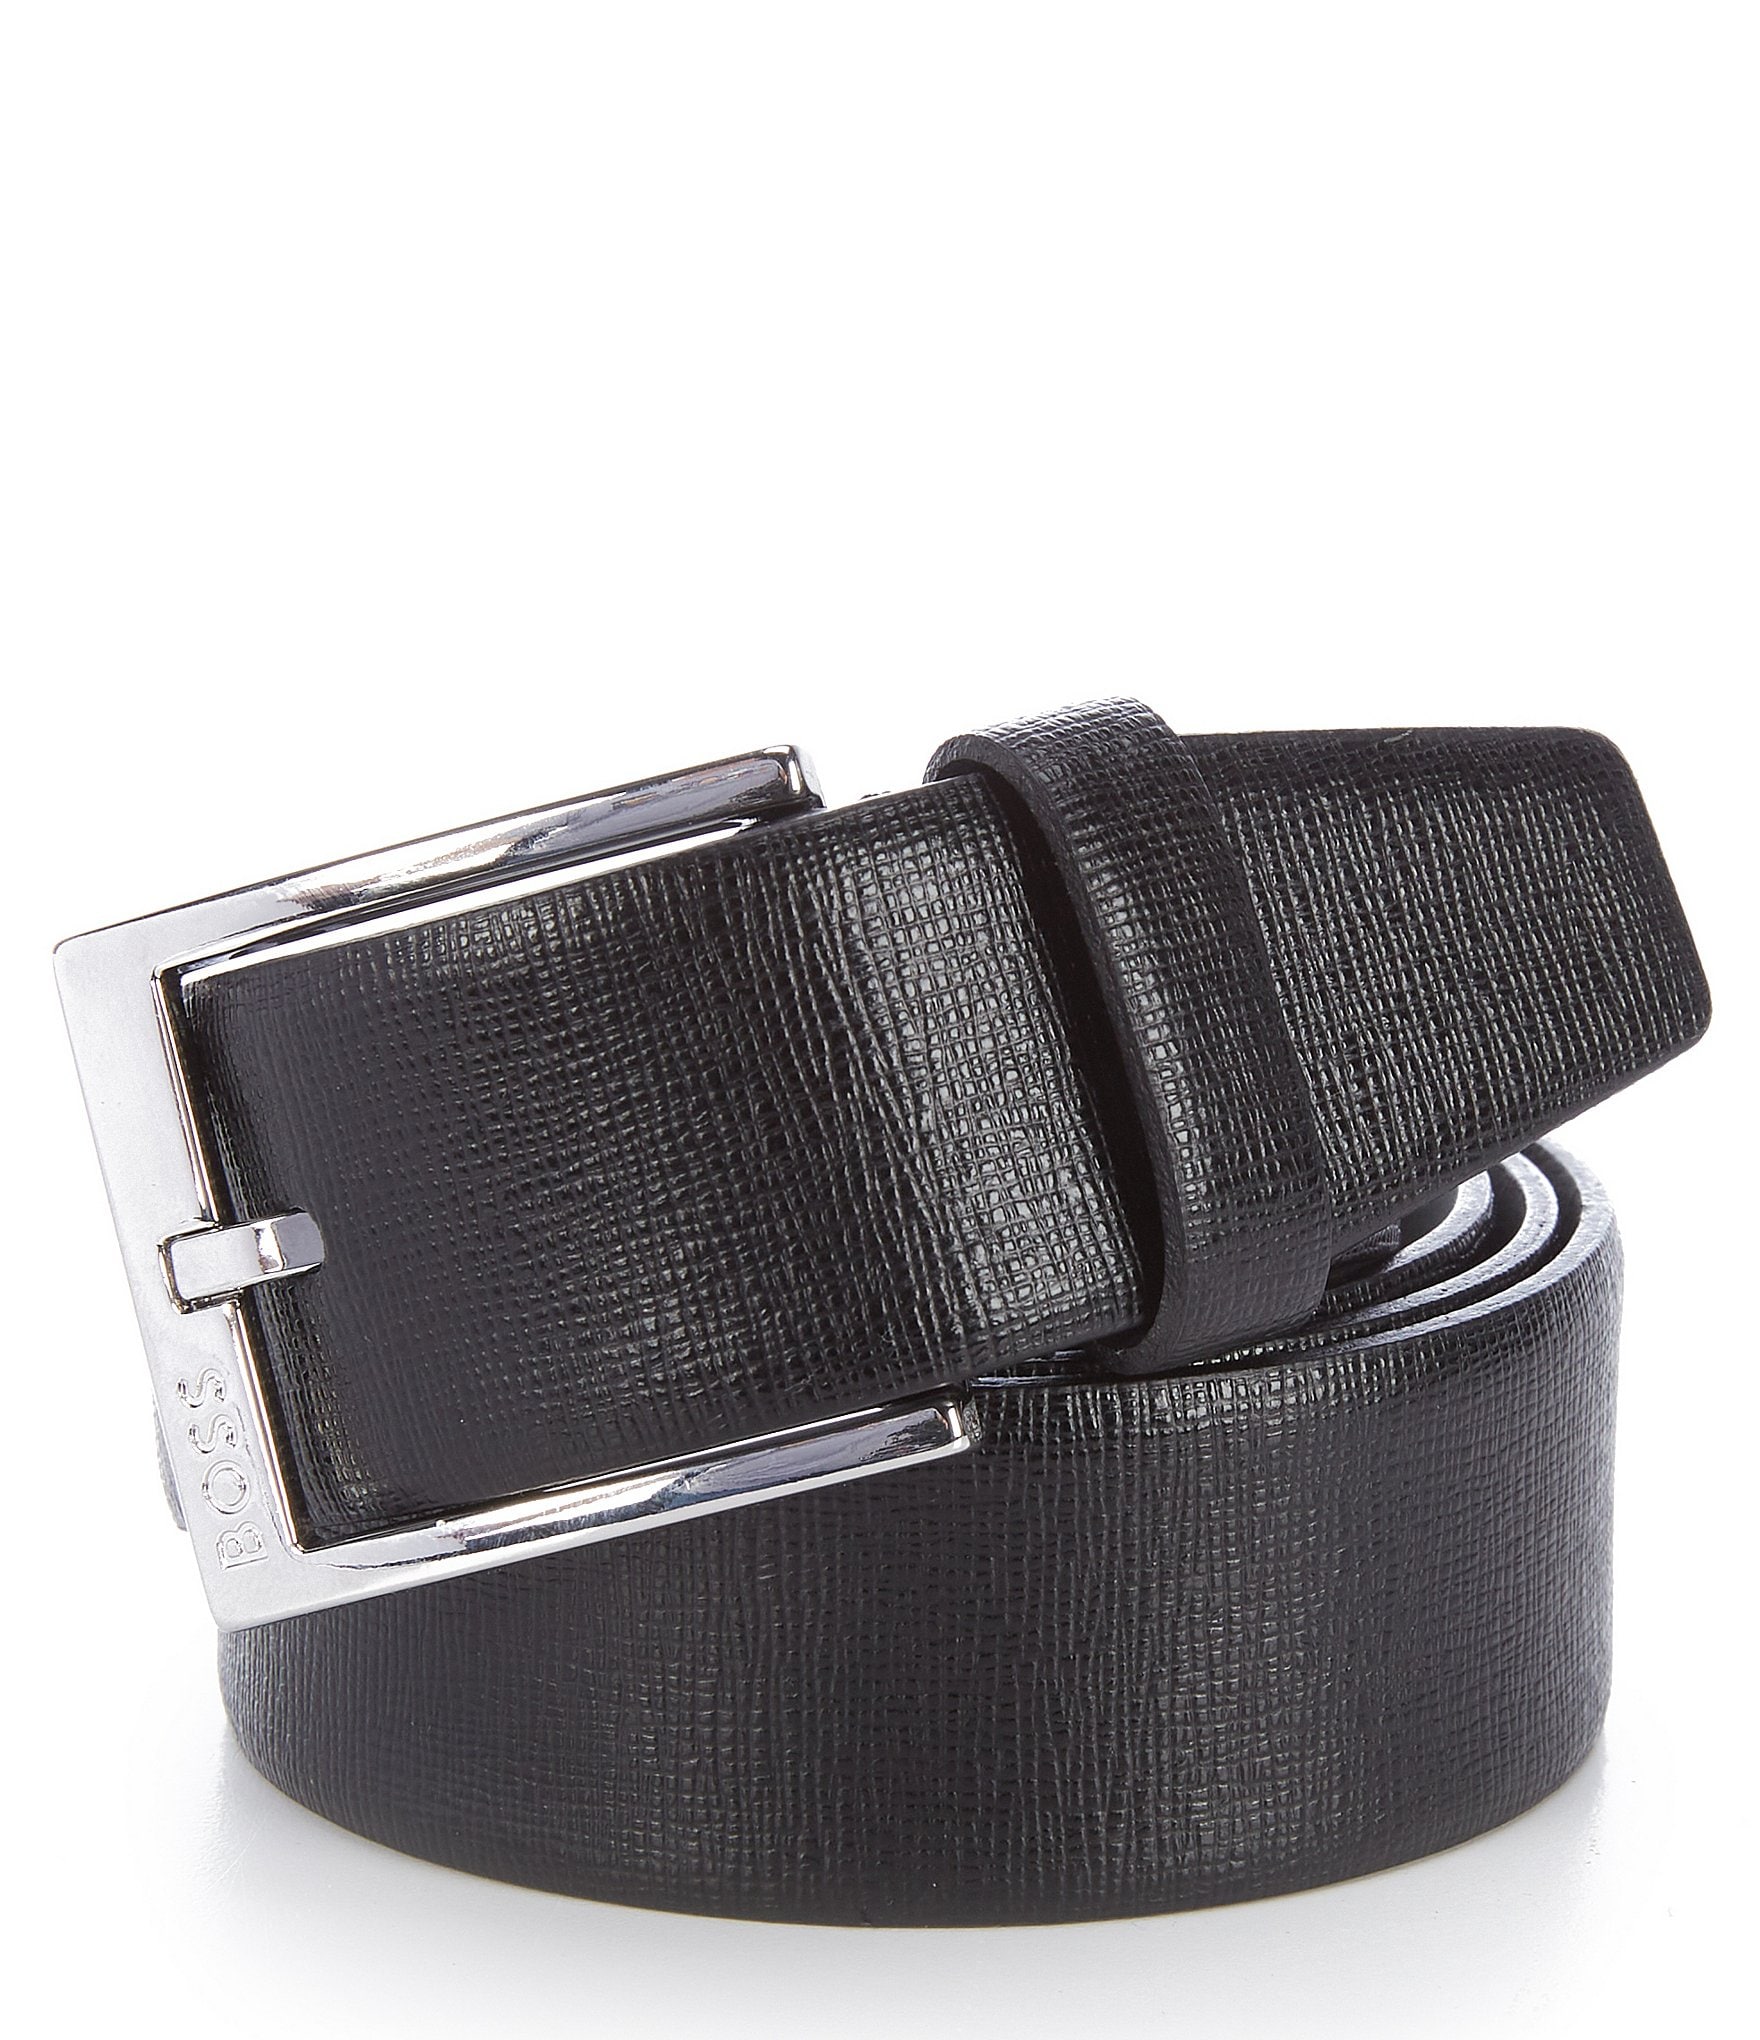 Torino Leather Company Stitched Edge Italian Leather Belt